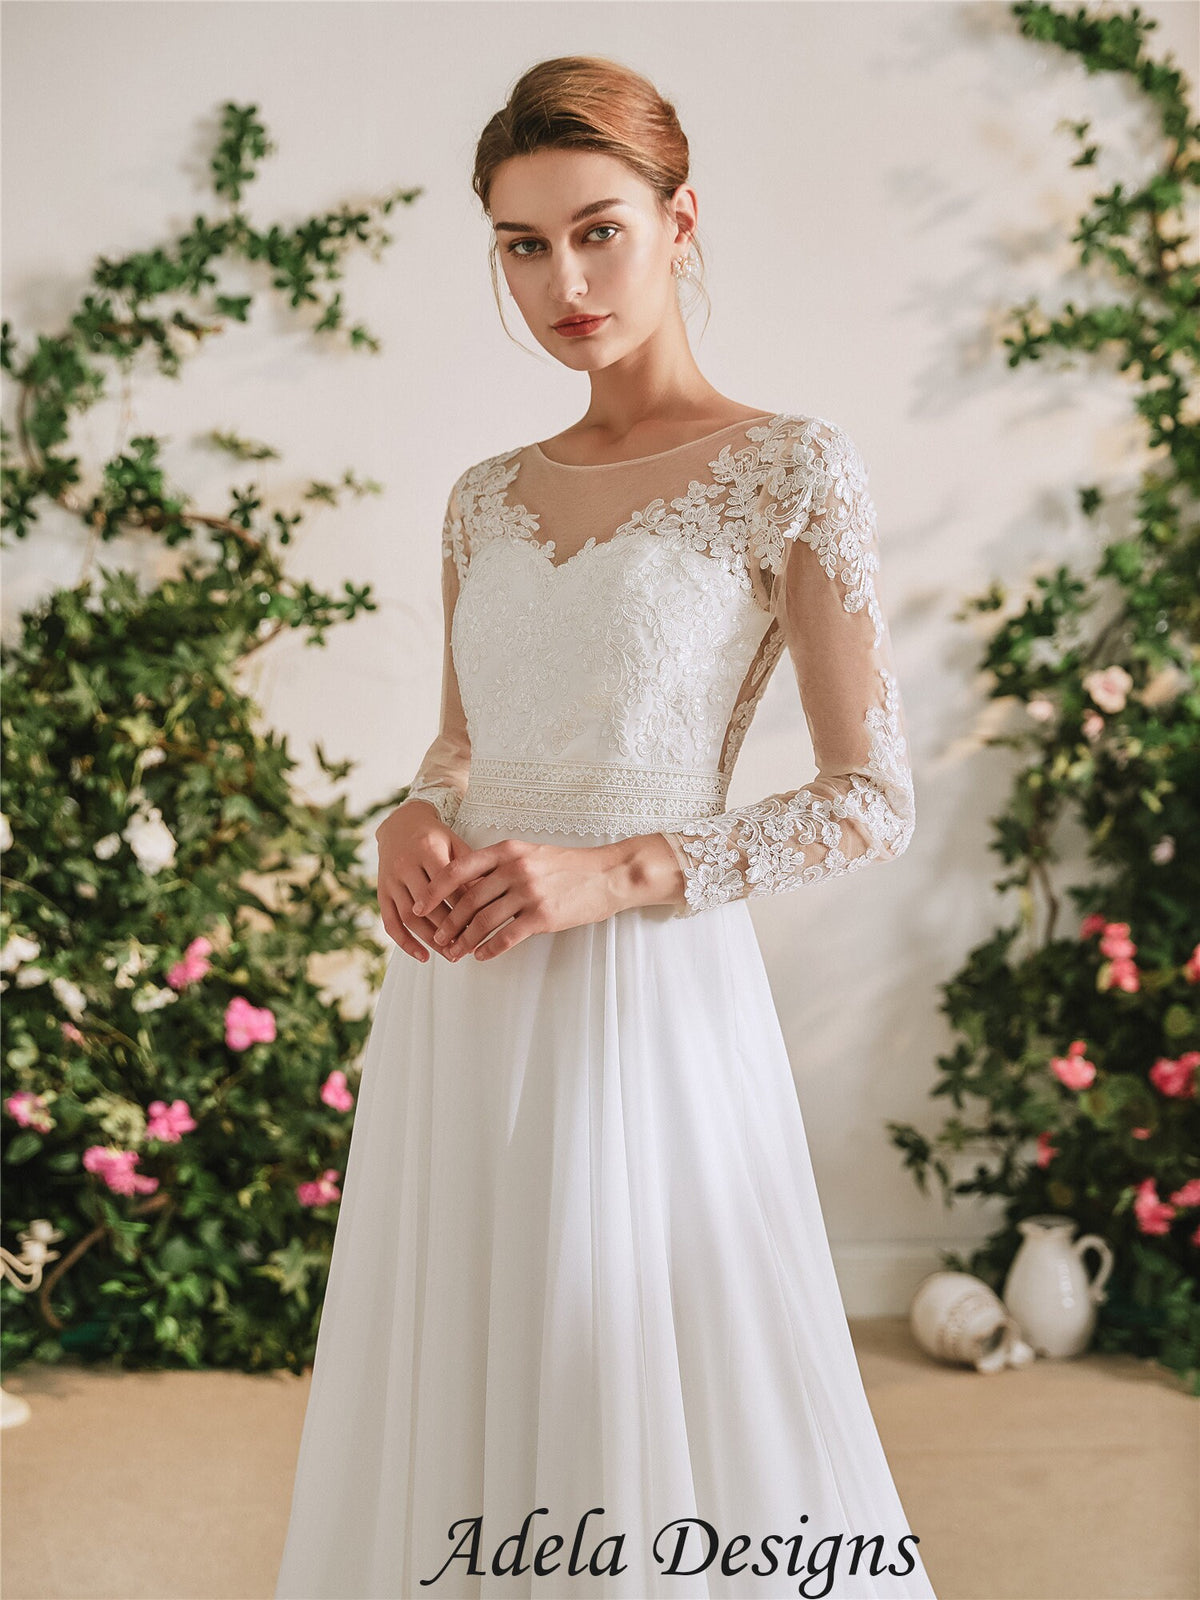 Long Sleeves Chiffon A-Line Lace Boho Wedding Dress Bridal Gown Illusion Back Modest Plus Size